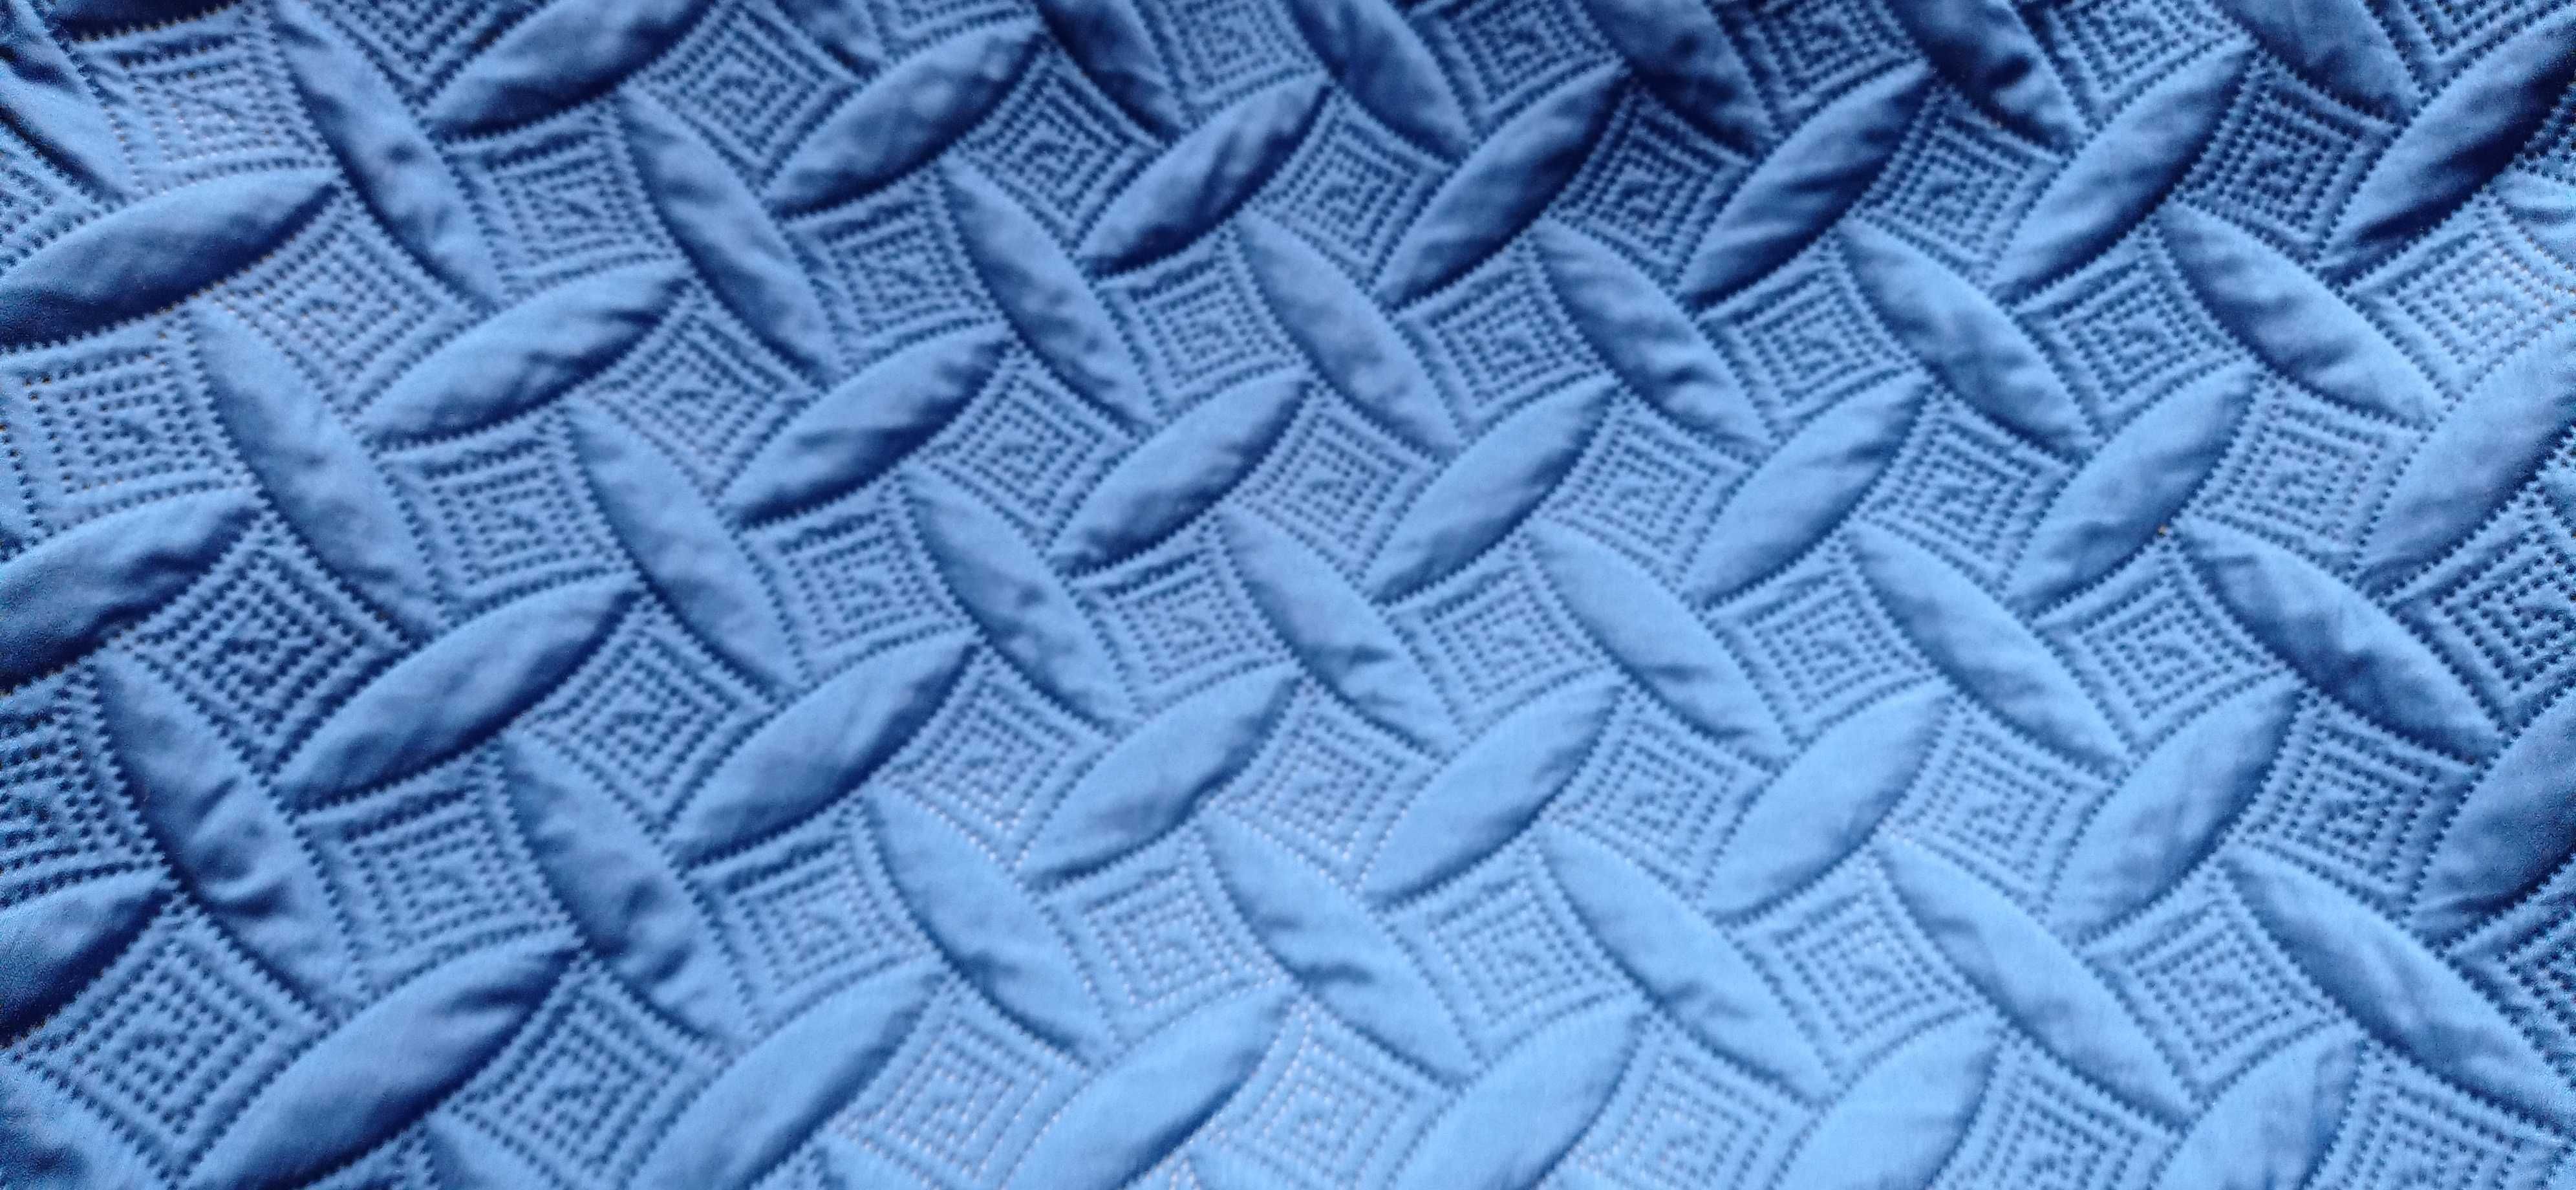 Colcha azul, cama de solteiro